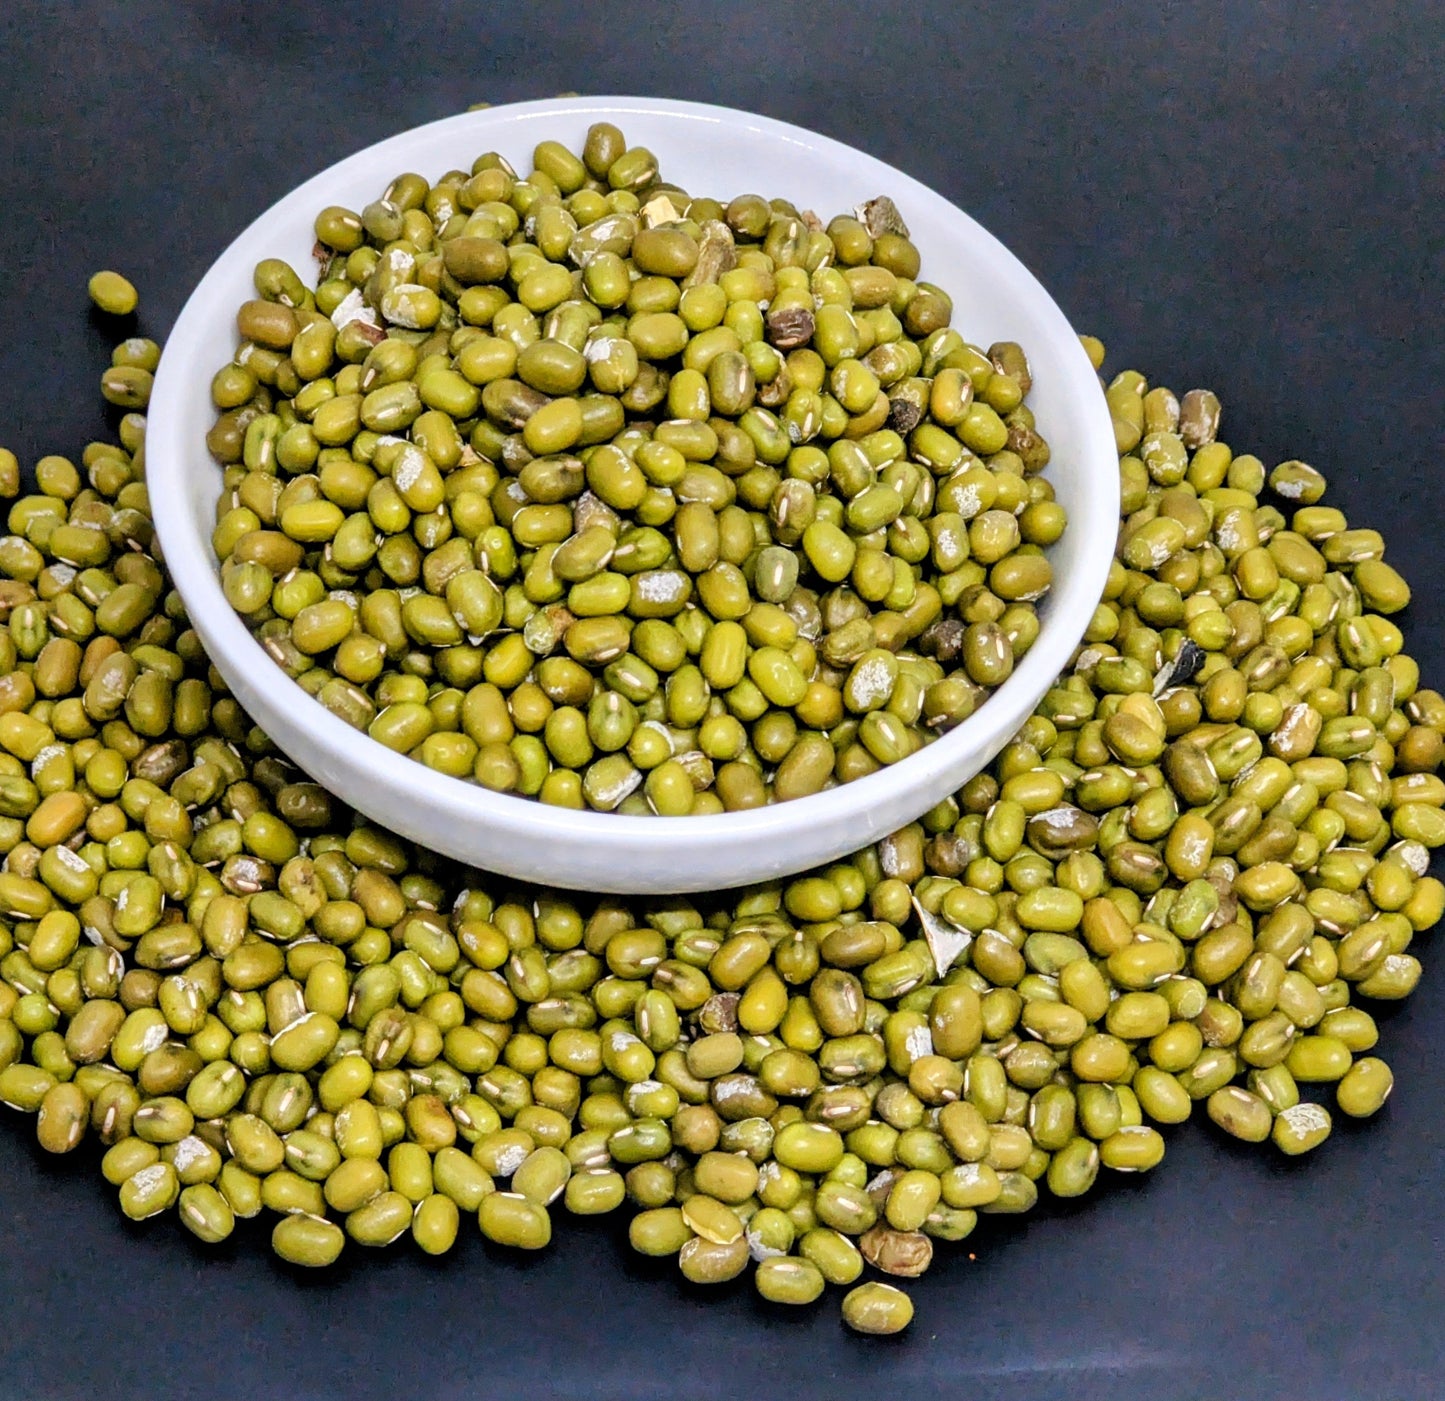 1kg+ Mung Bean for Sprouting seeds Microgreens Green Salad Healthy Organic Super Food | Ceylon  Organic-8